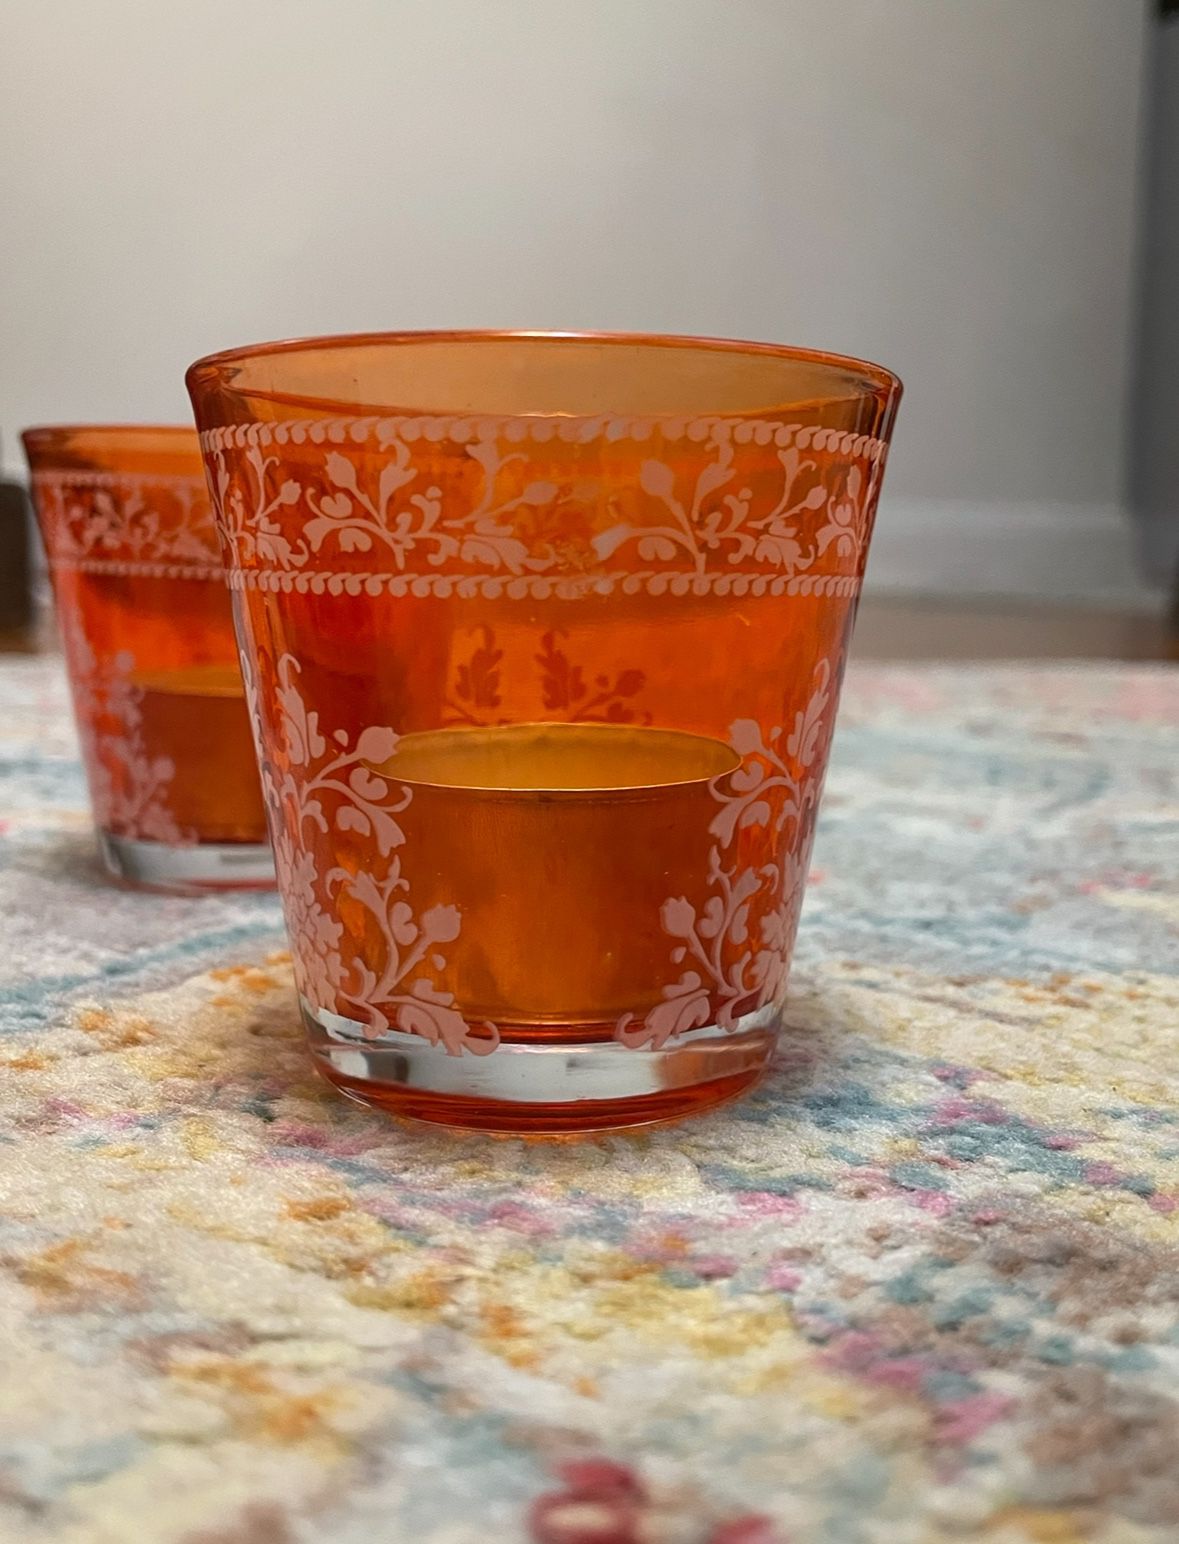 X12 Orange Glass Decorative Votive Candleholders